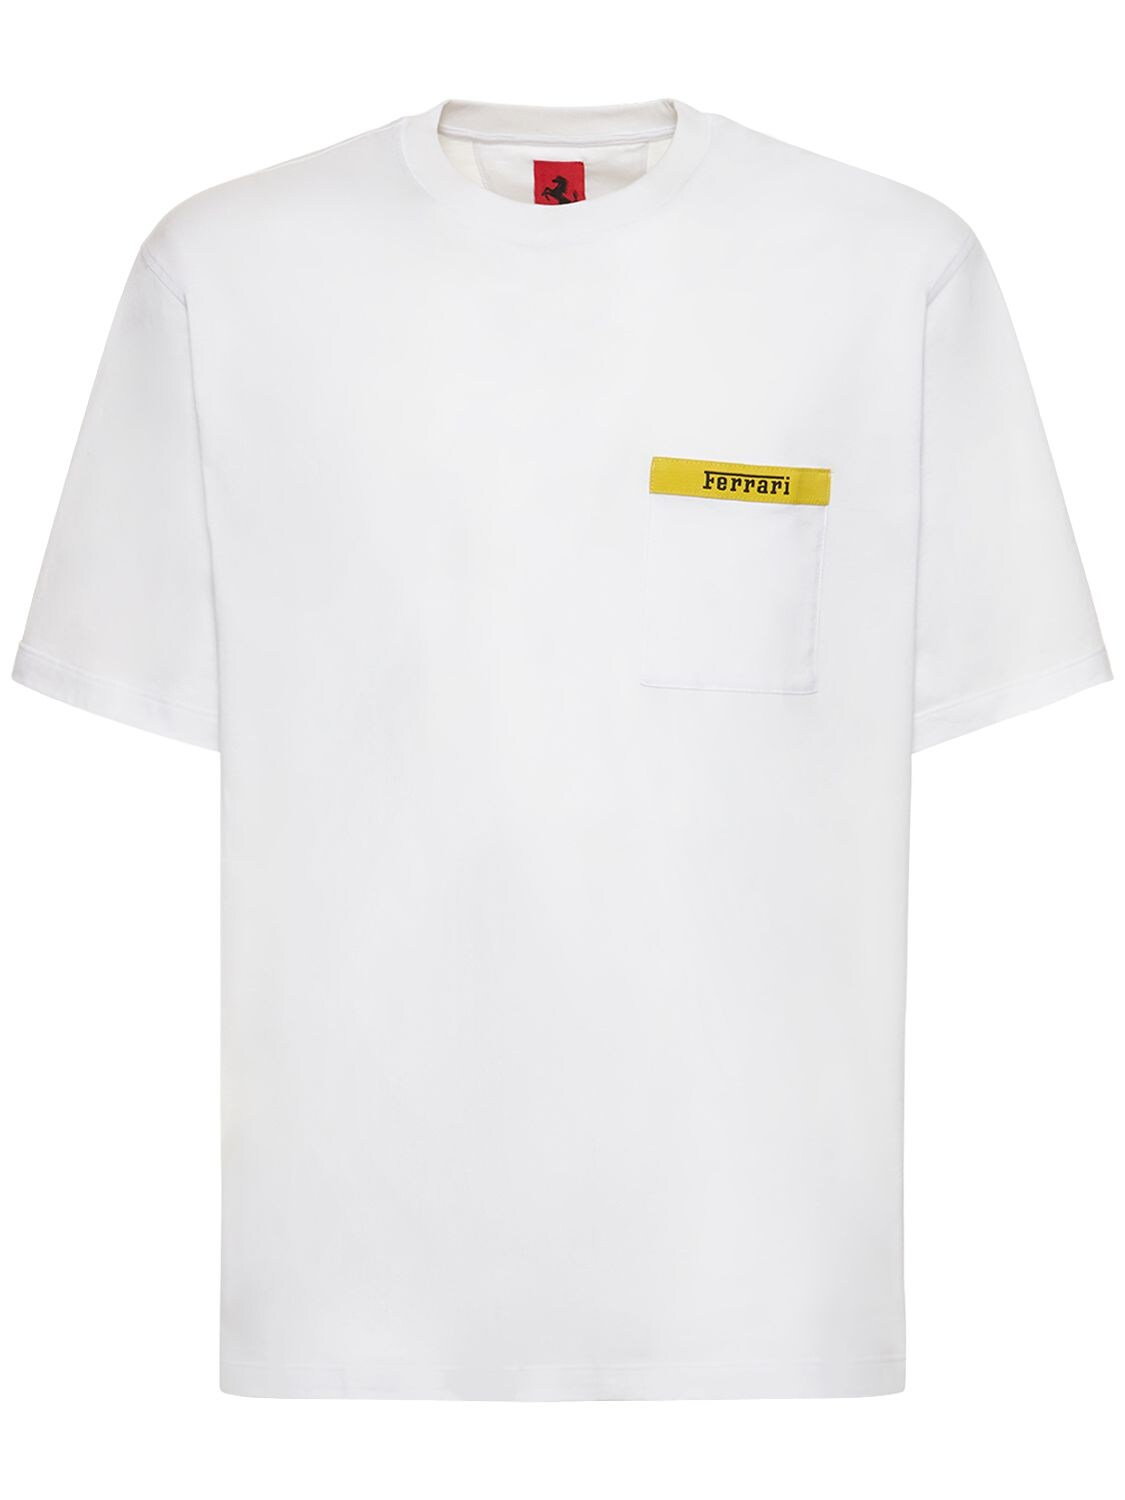 FERRARI S/s T-shirt W/ Pocket